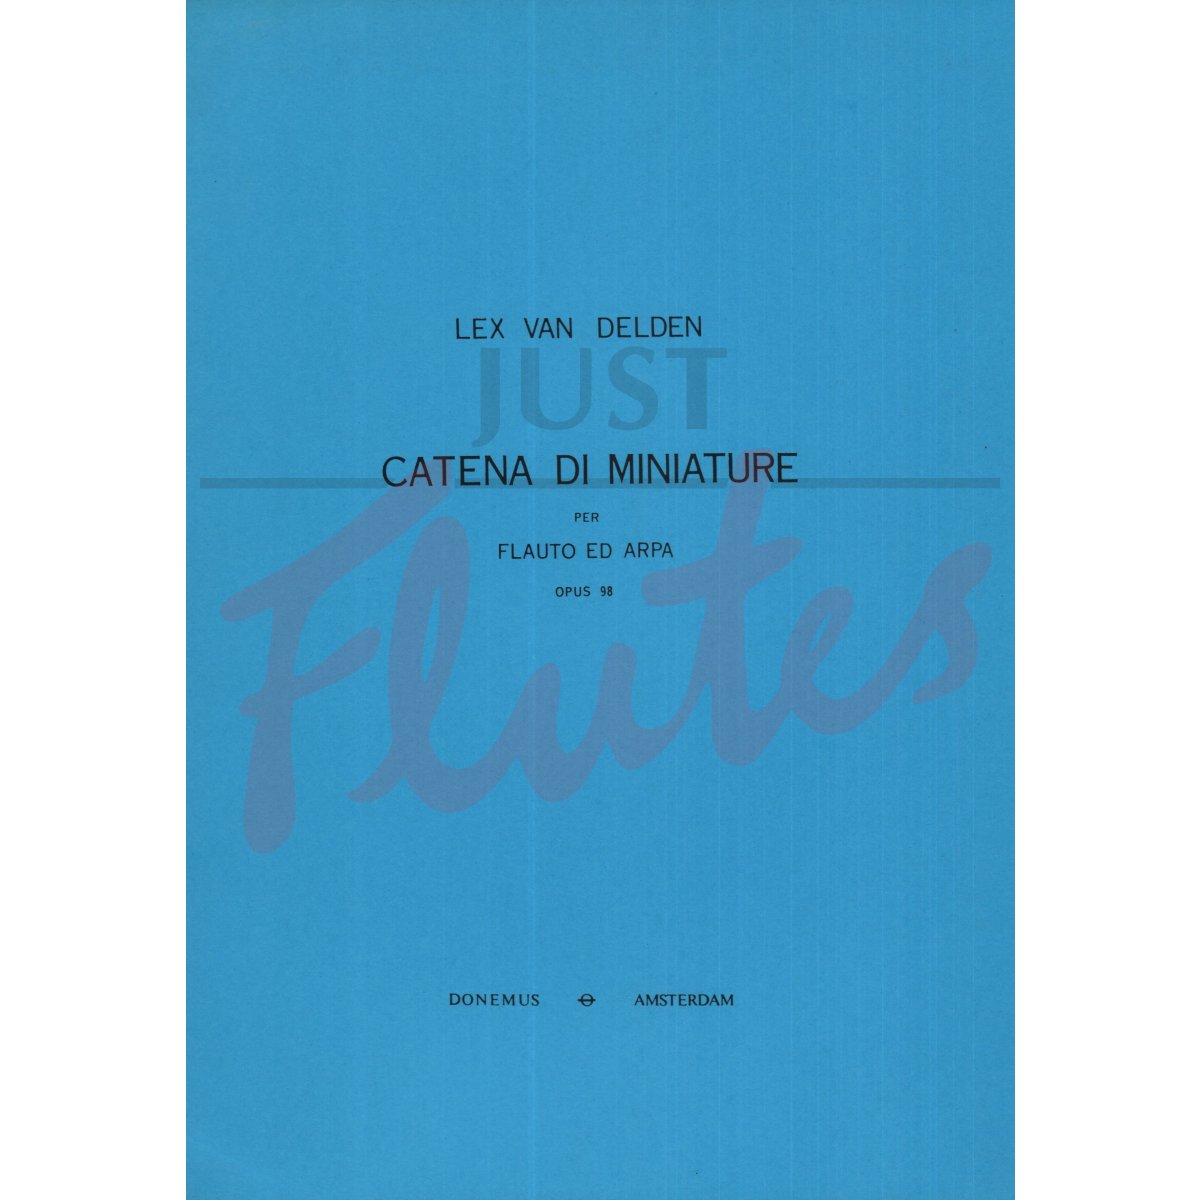 Catena di Miniature for Flute and Harp